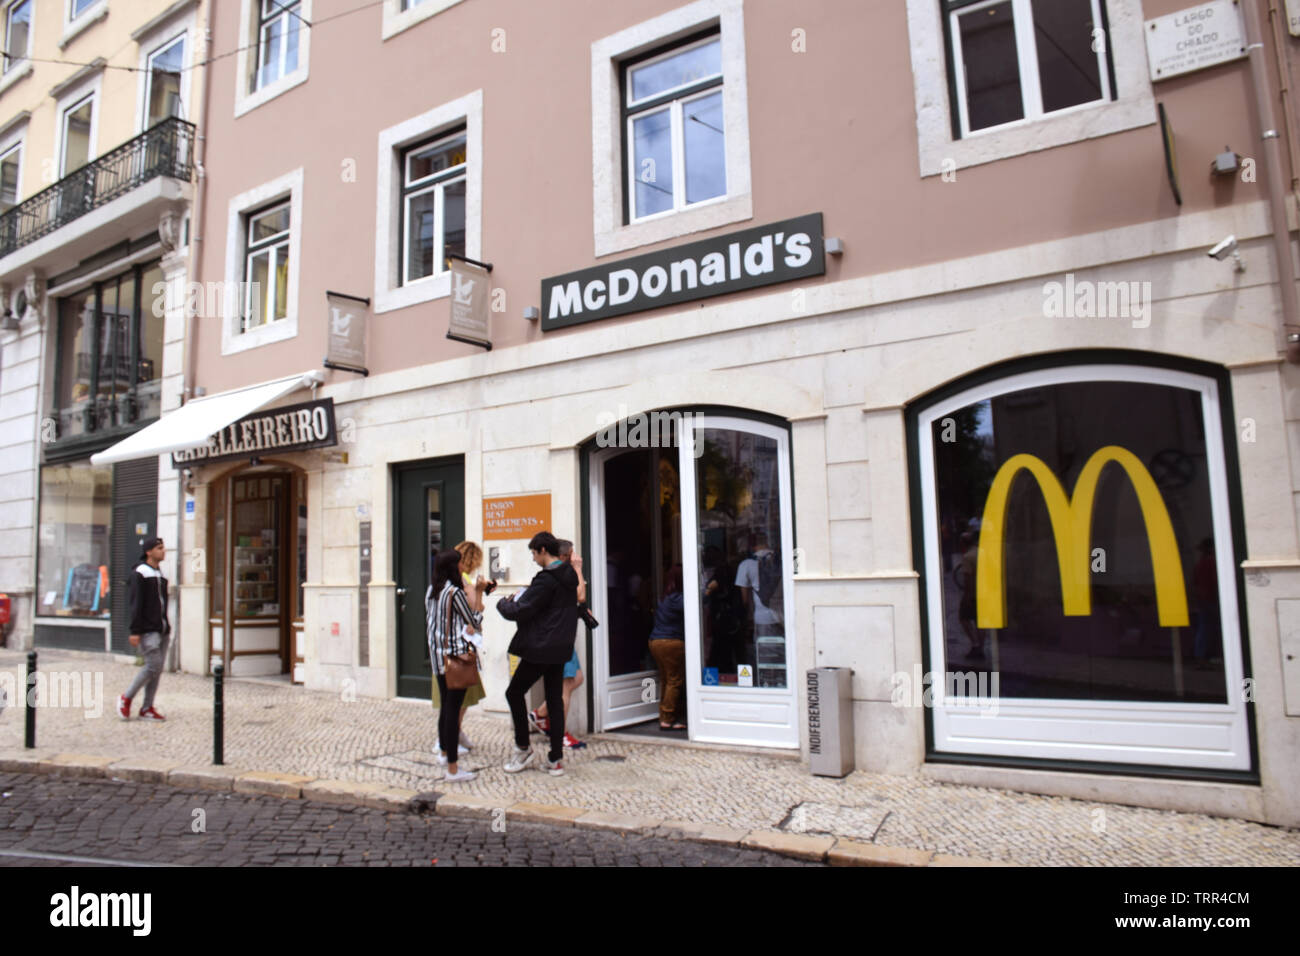 McDonalds, Chiado, Lisbona, Portogallo, Giugno 2019 Foto Stock